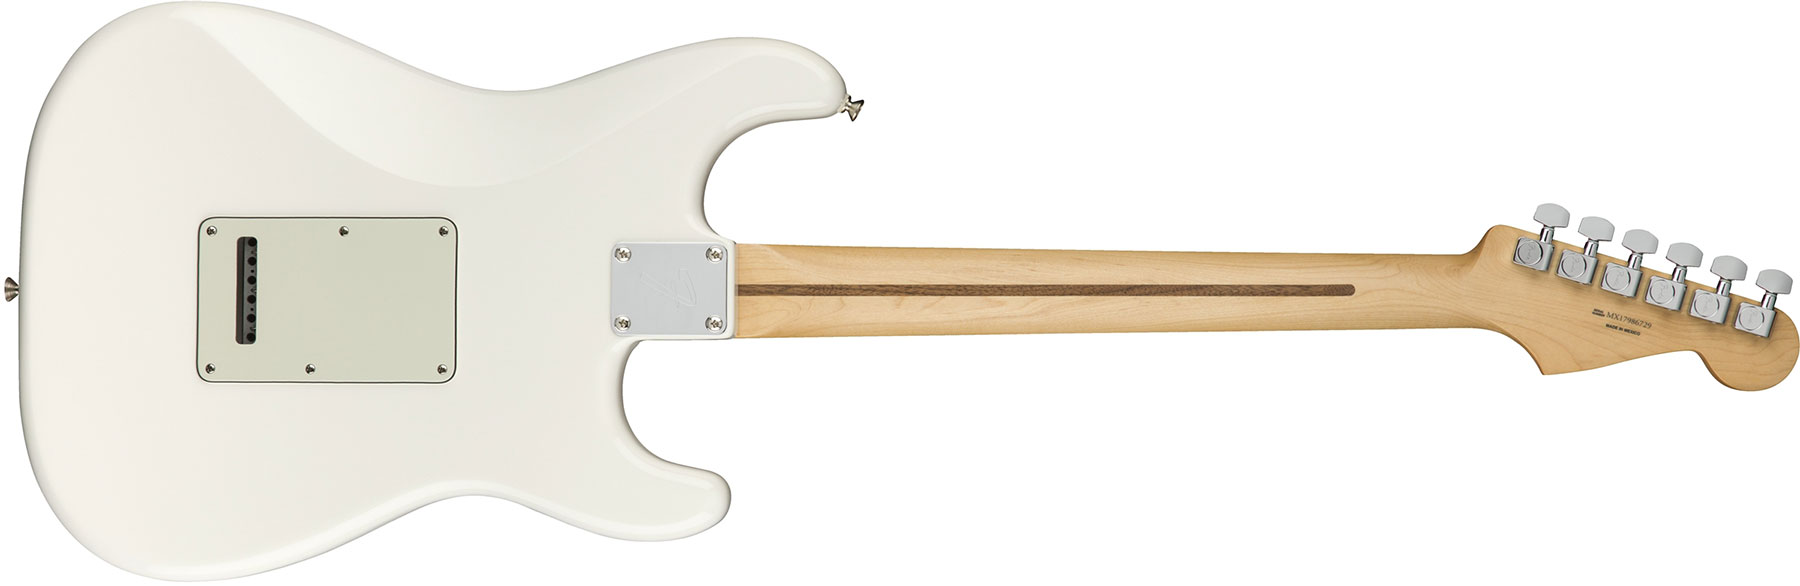 Fender Strat Player Lh Gaucher Mex Sss Mn - Polar White - Left-handed electric guitar - Variation 1